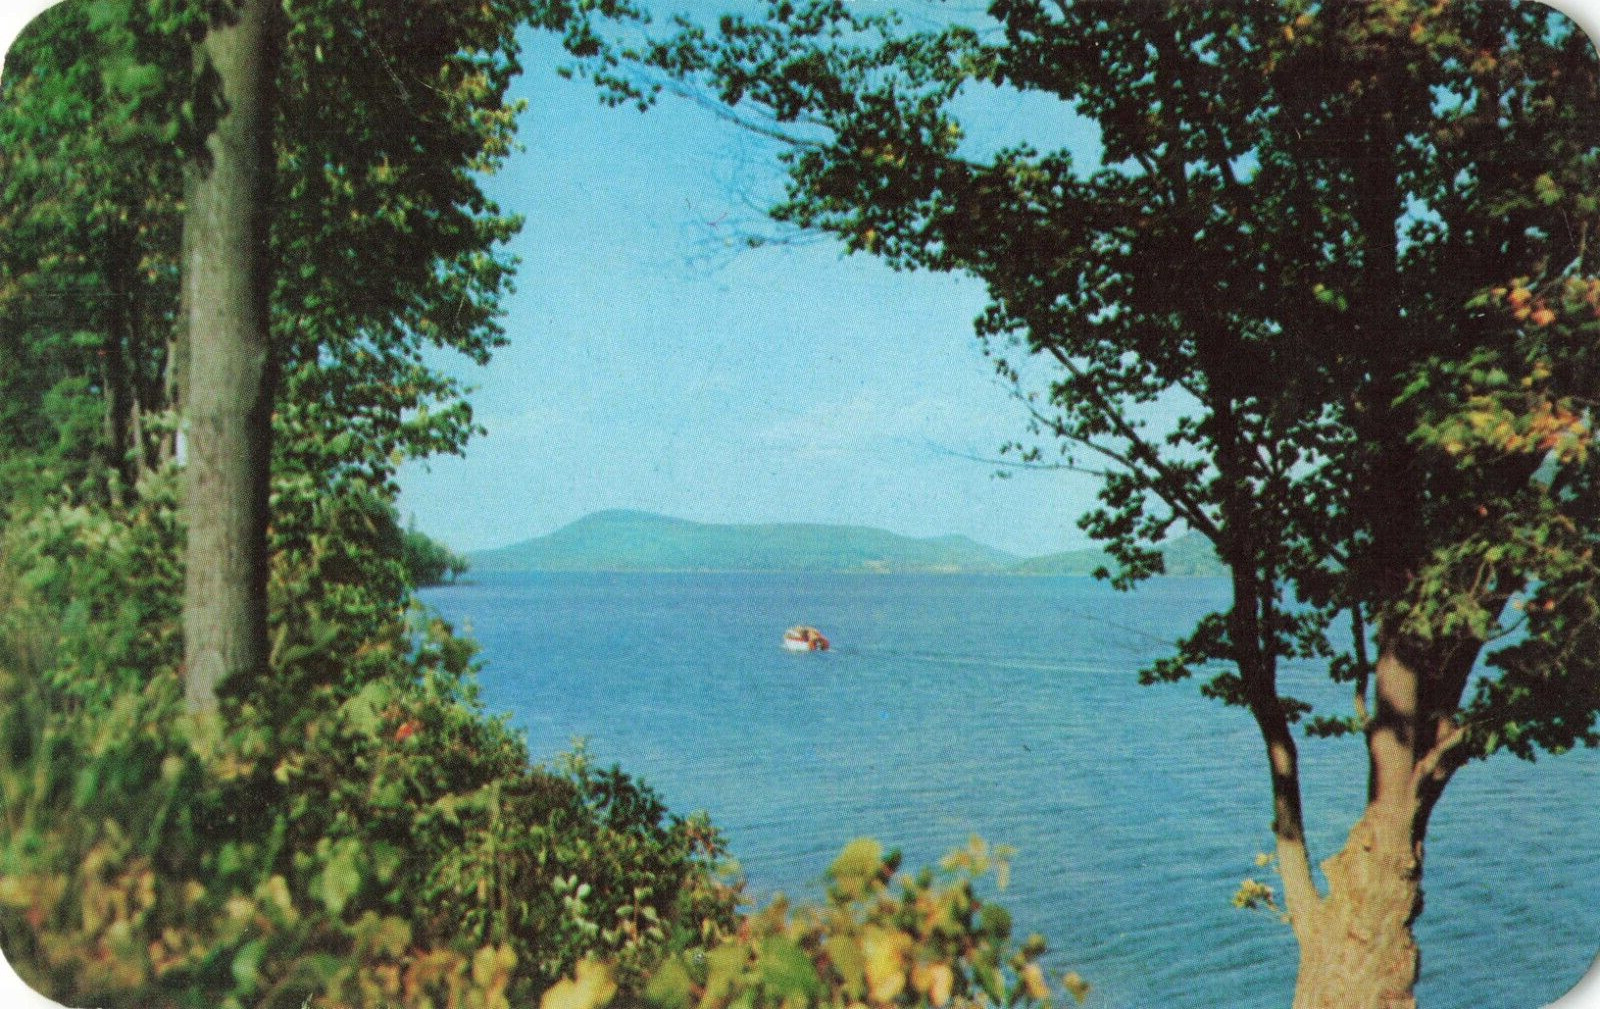 Cooperstown New York, Otsego Lake, Sleeping Lion, Boat, Vintage Postcard